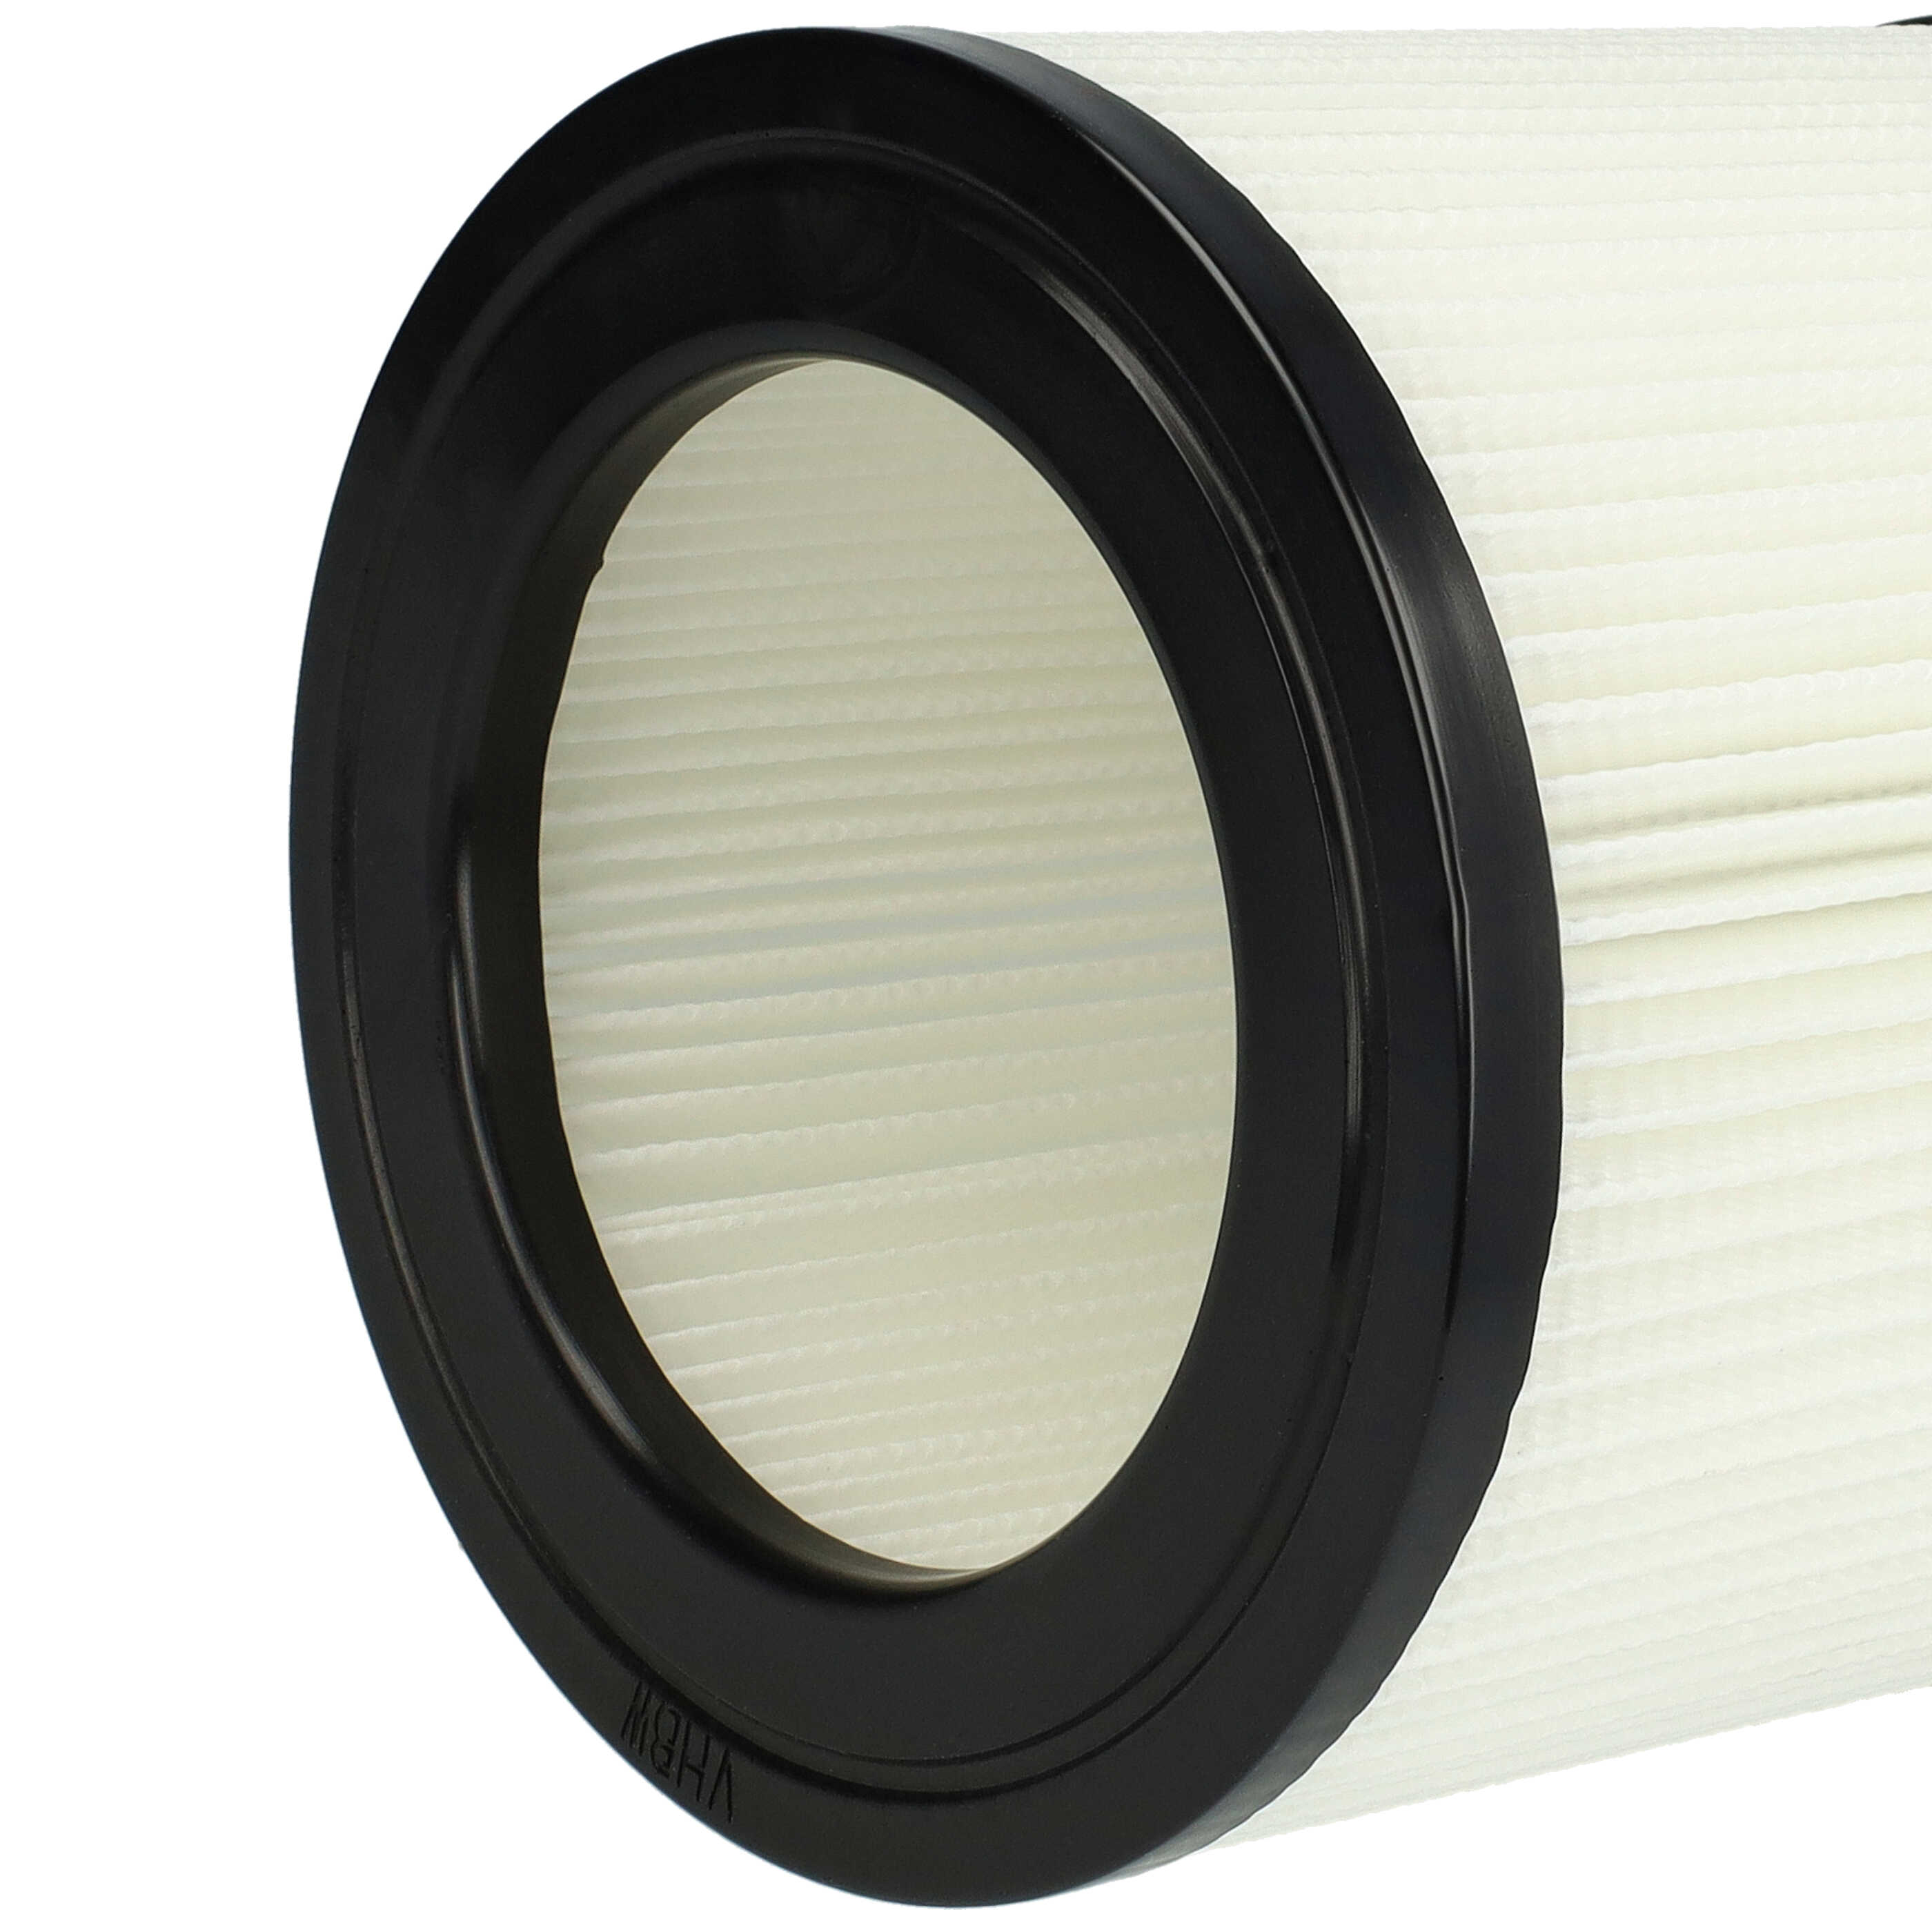 1x cartridge filter replaces Kärcher 2.889-219.0 for KärcherVacuum Cleaner, black / white